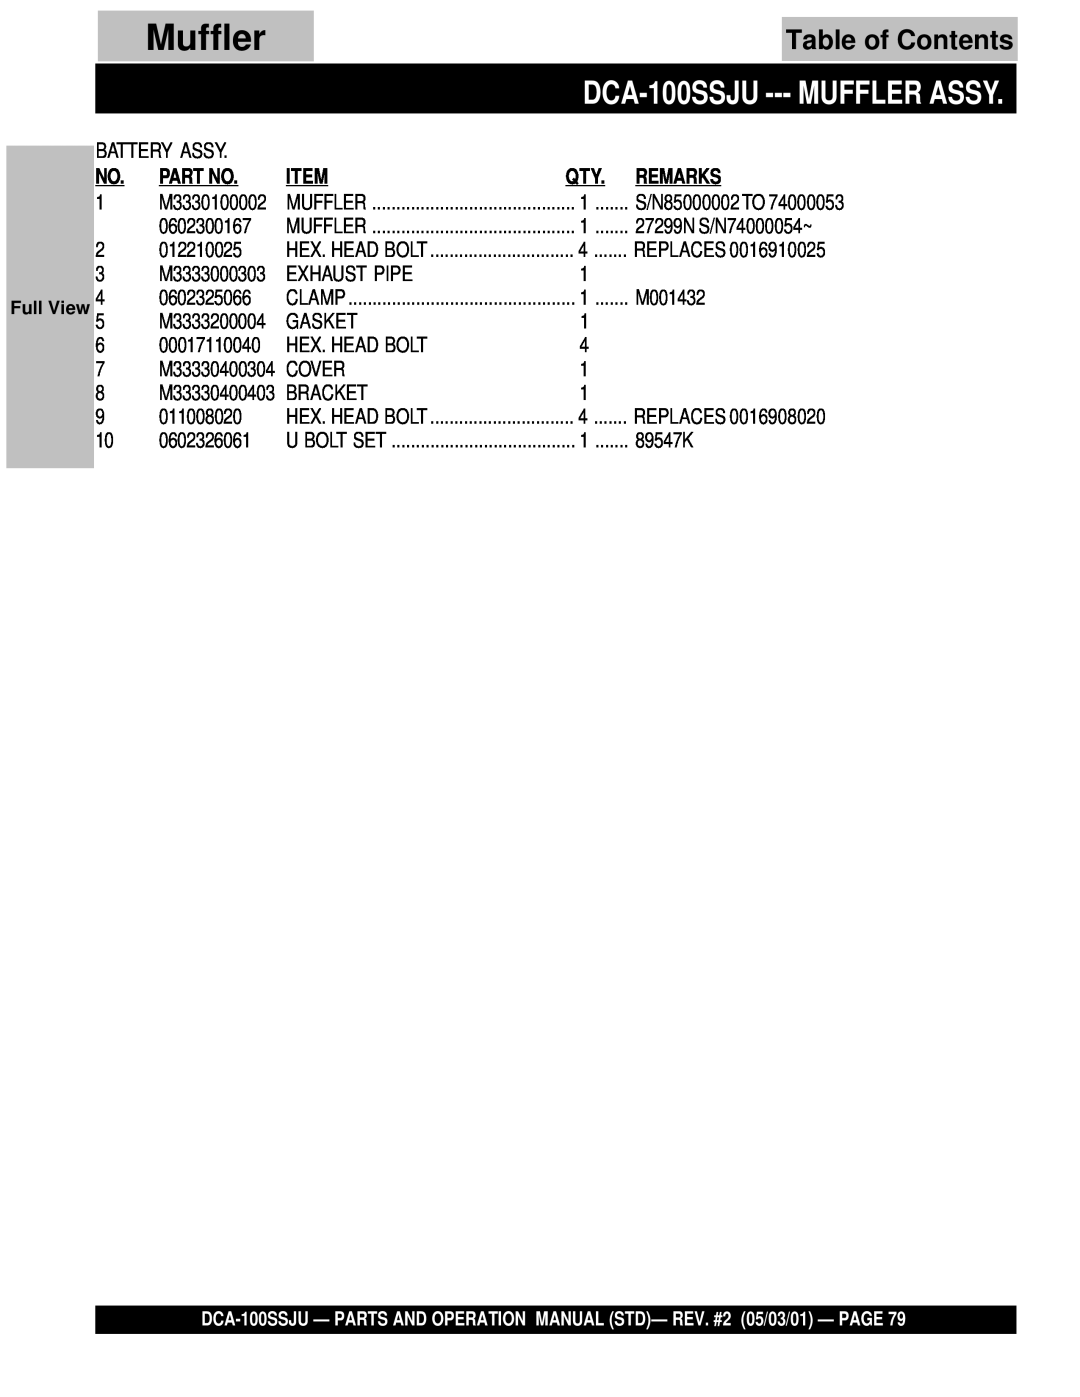 Multiquip operation manual DCA-100SSJUMUFFLER ASSY, Muffler, Table of Contents 